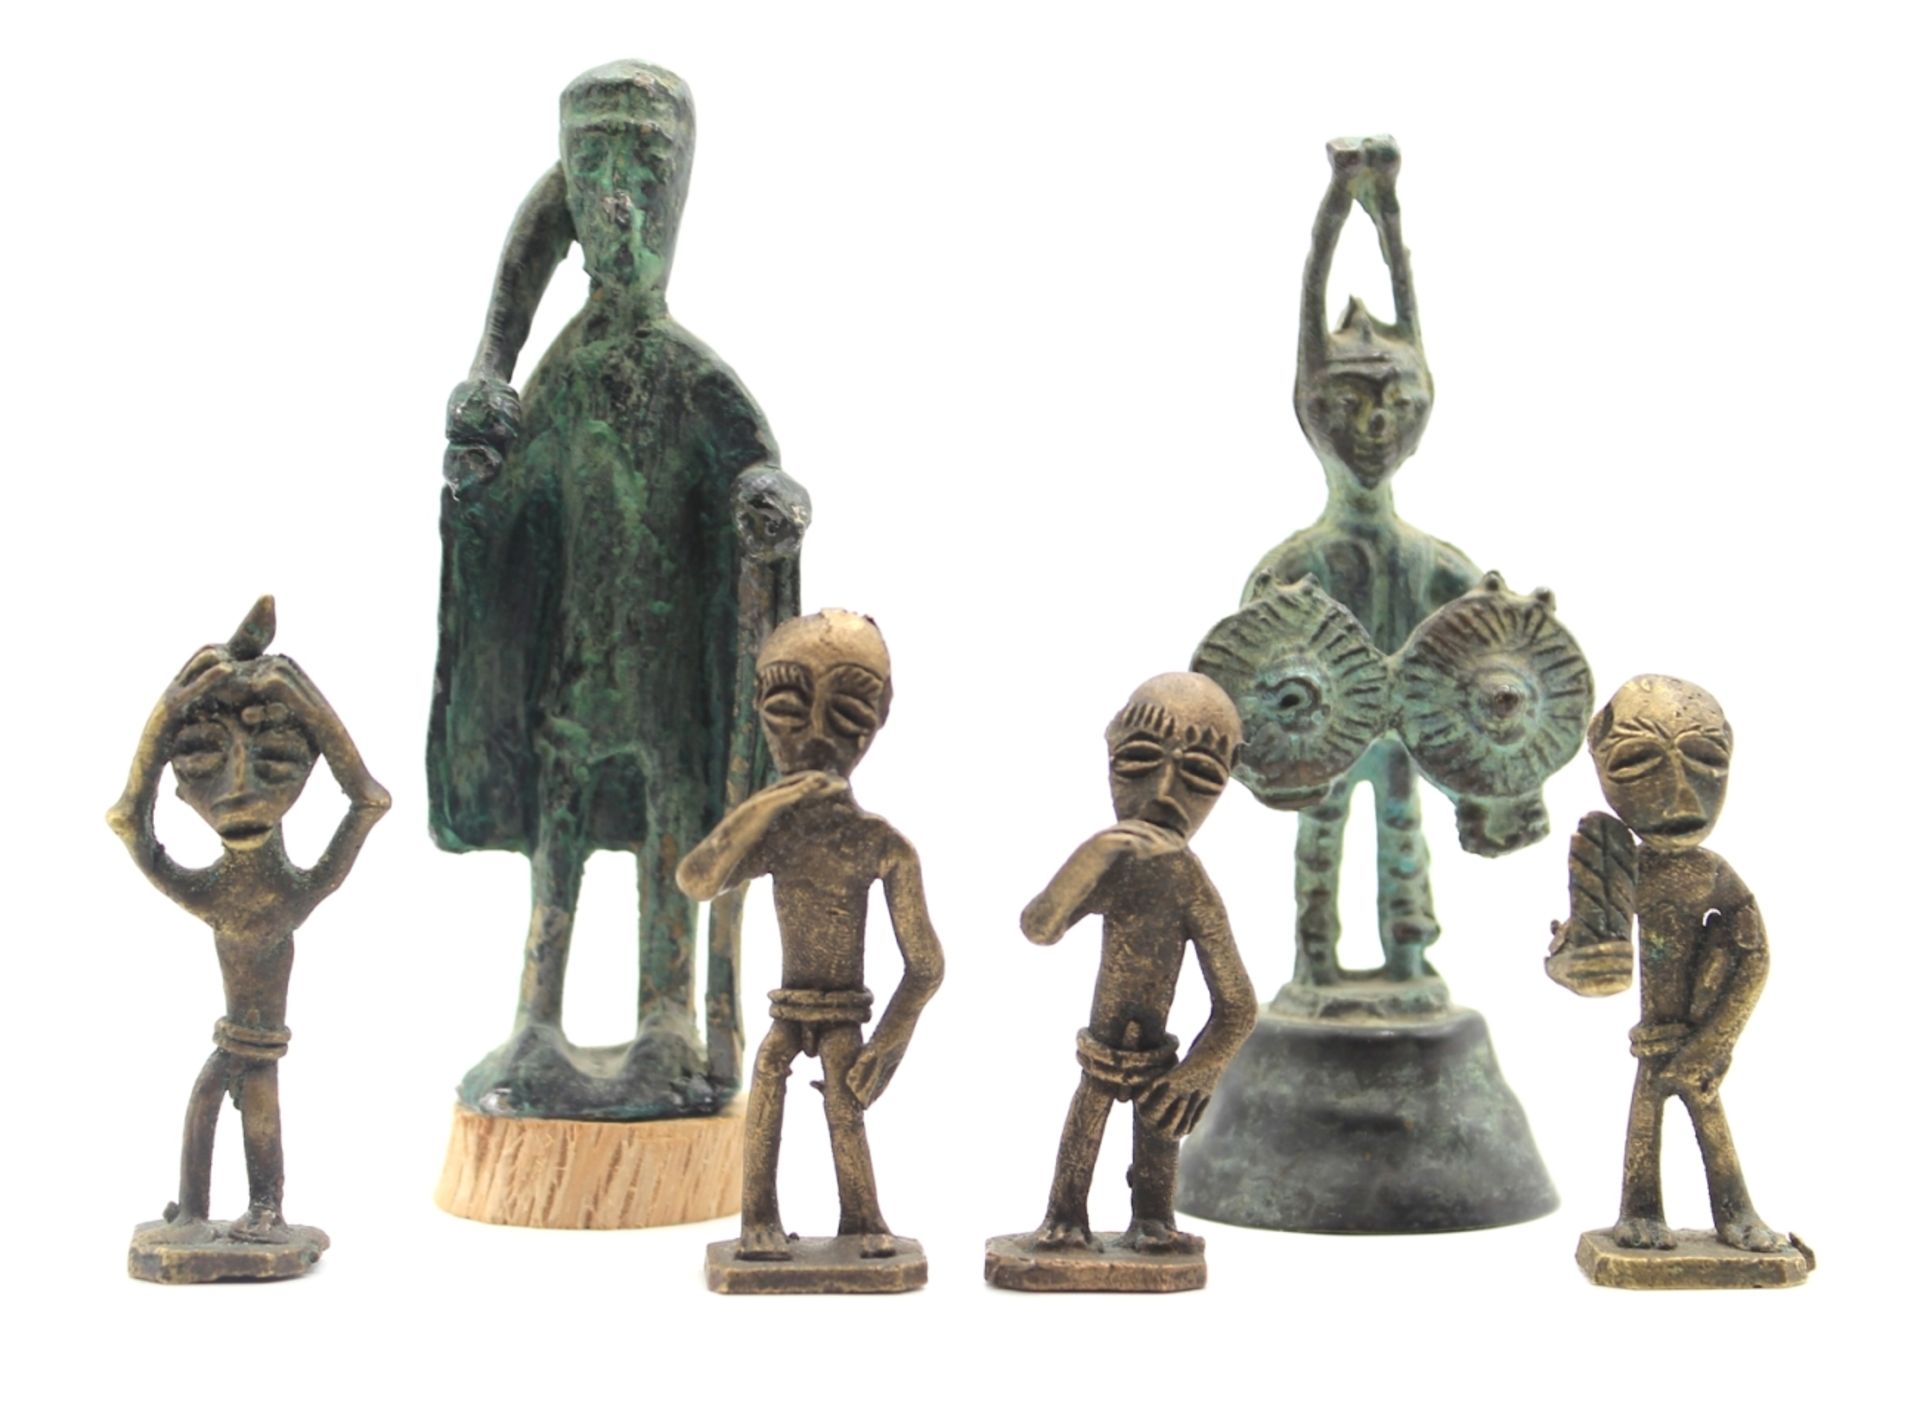 Lot Figuren - u.a. Afrika Zinkguß bronziert und Gelbguß, Höhe ca. 5 bis 11 cm, 6 Stück- - -25.00 %